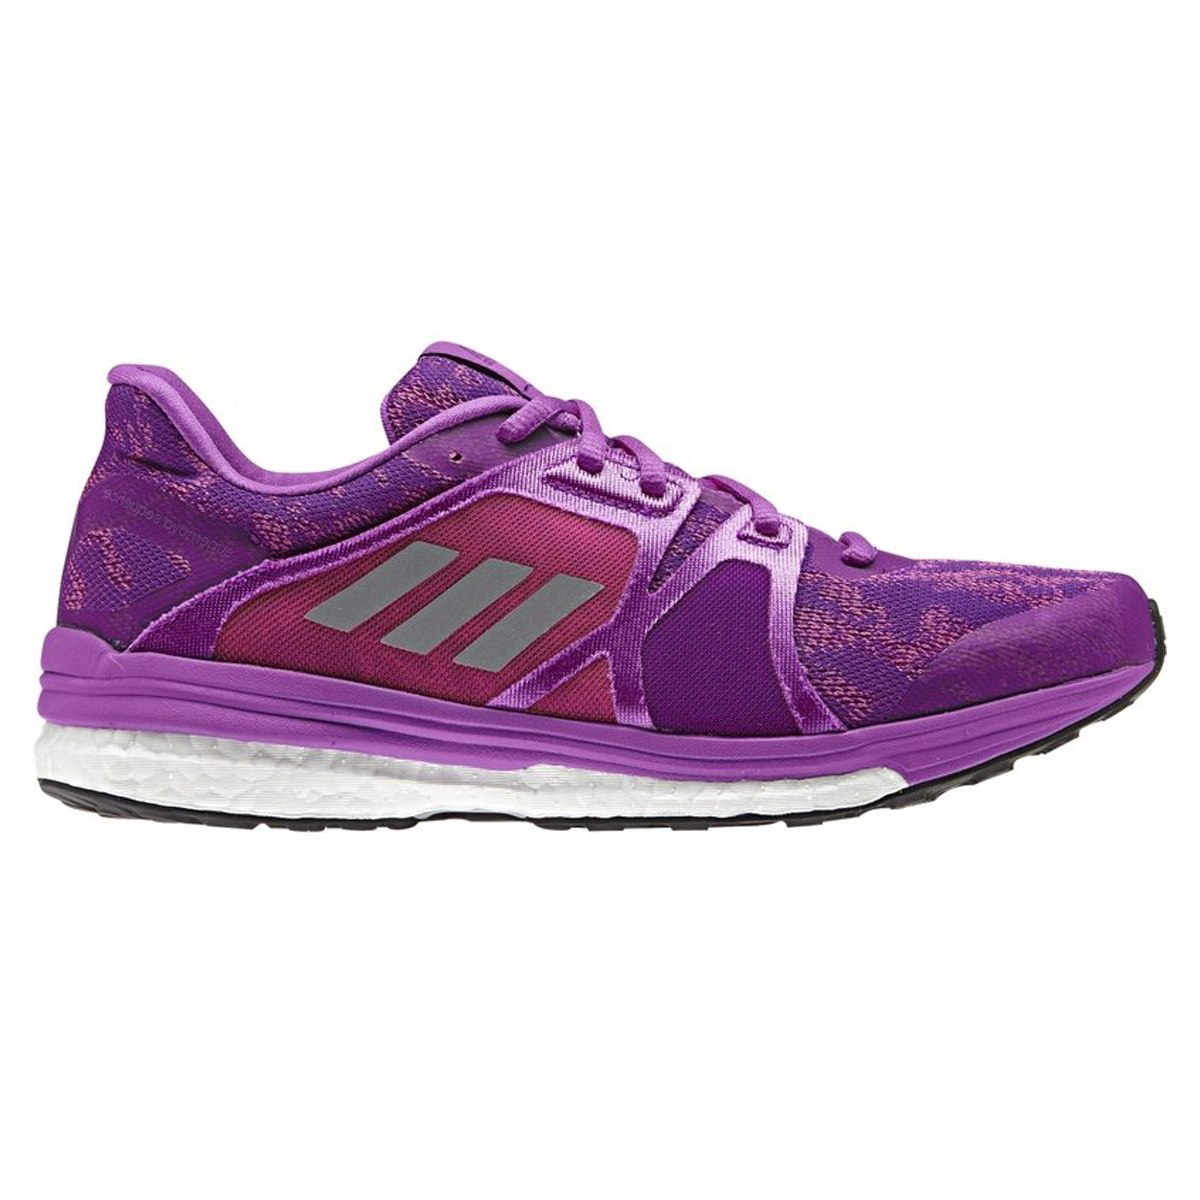 Adidas Supernova Sequence 9 Women's Running Shoes AQ3548